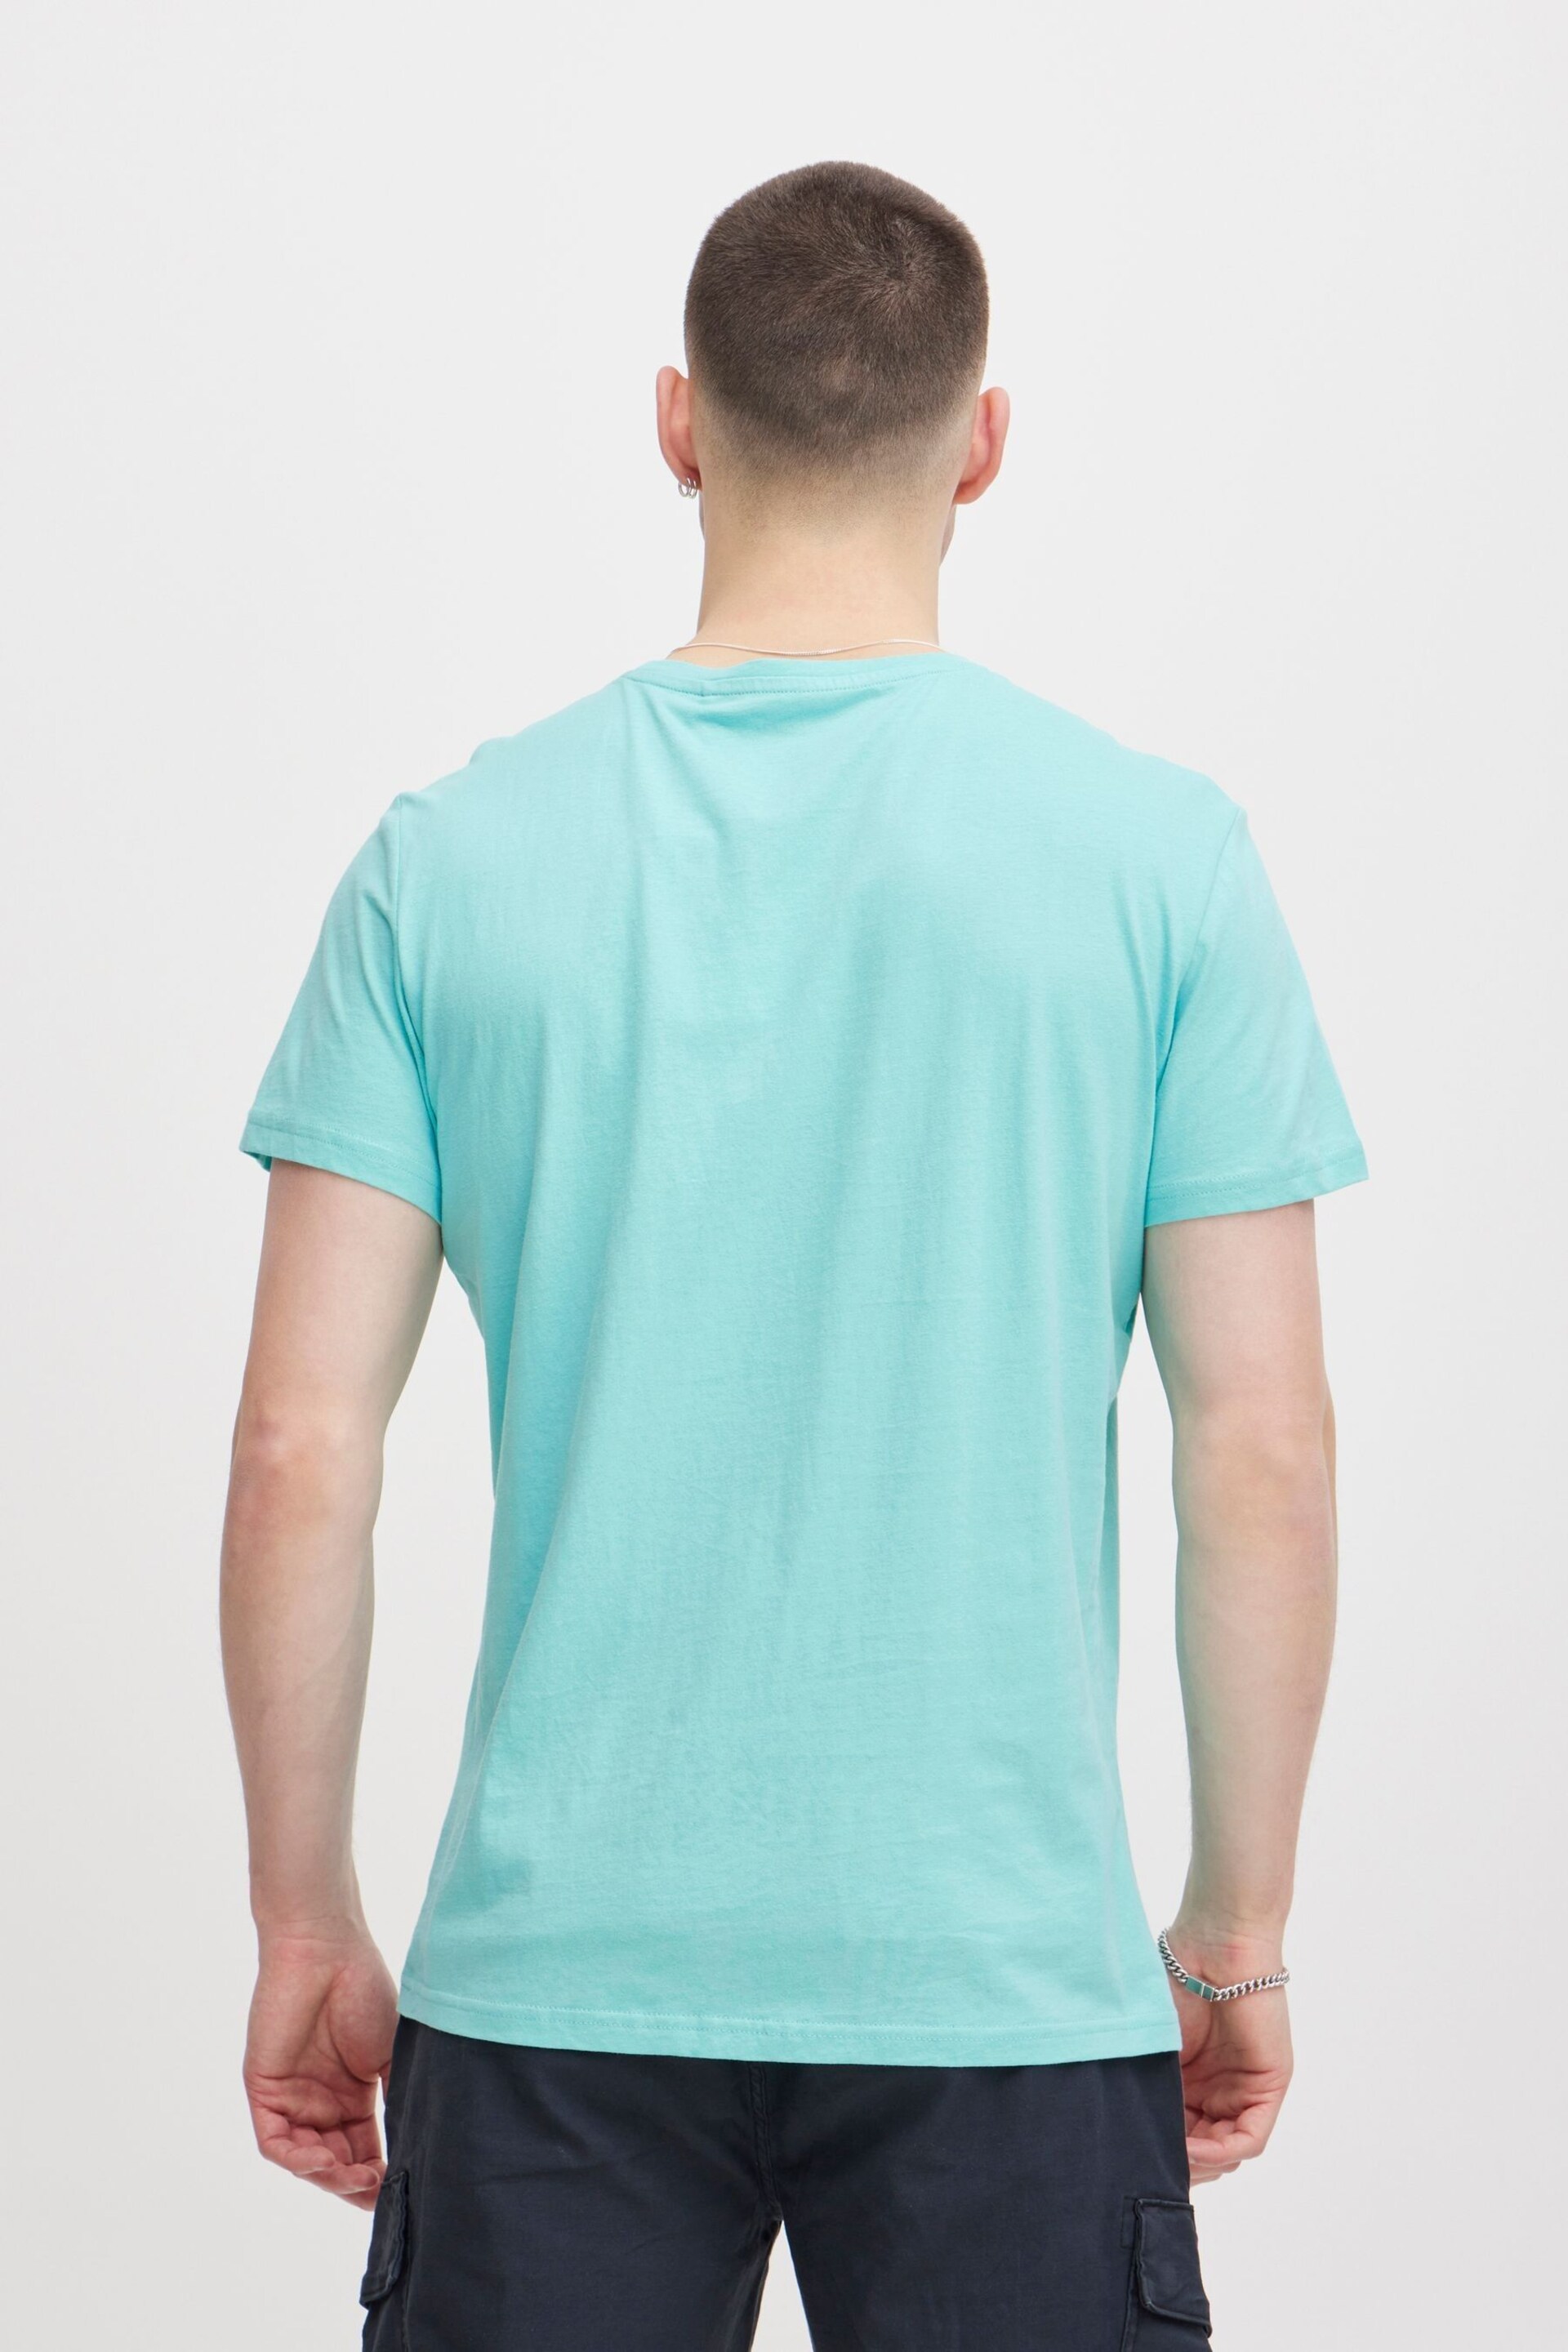 Blend Blue Light Original Printed Short Sleeve T-Shirt - Image 2 of 5